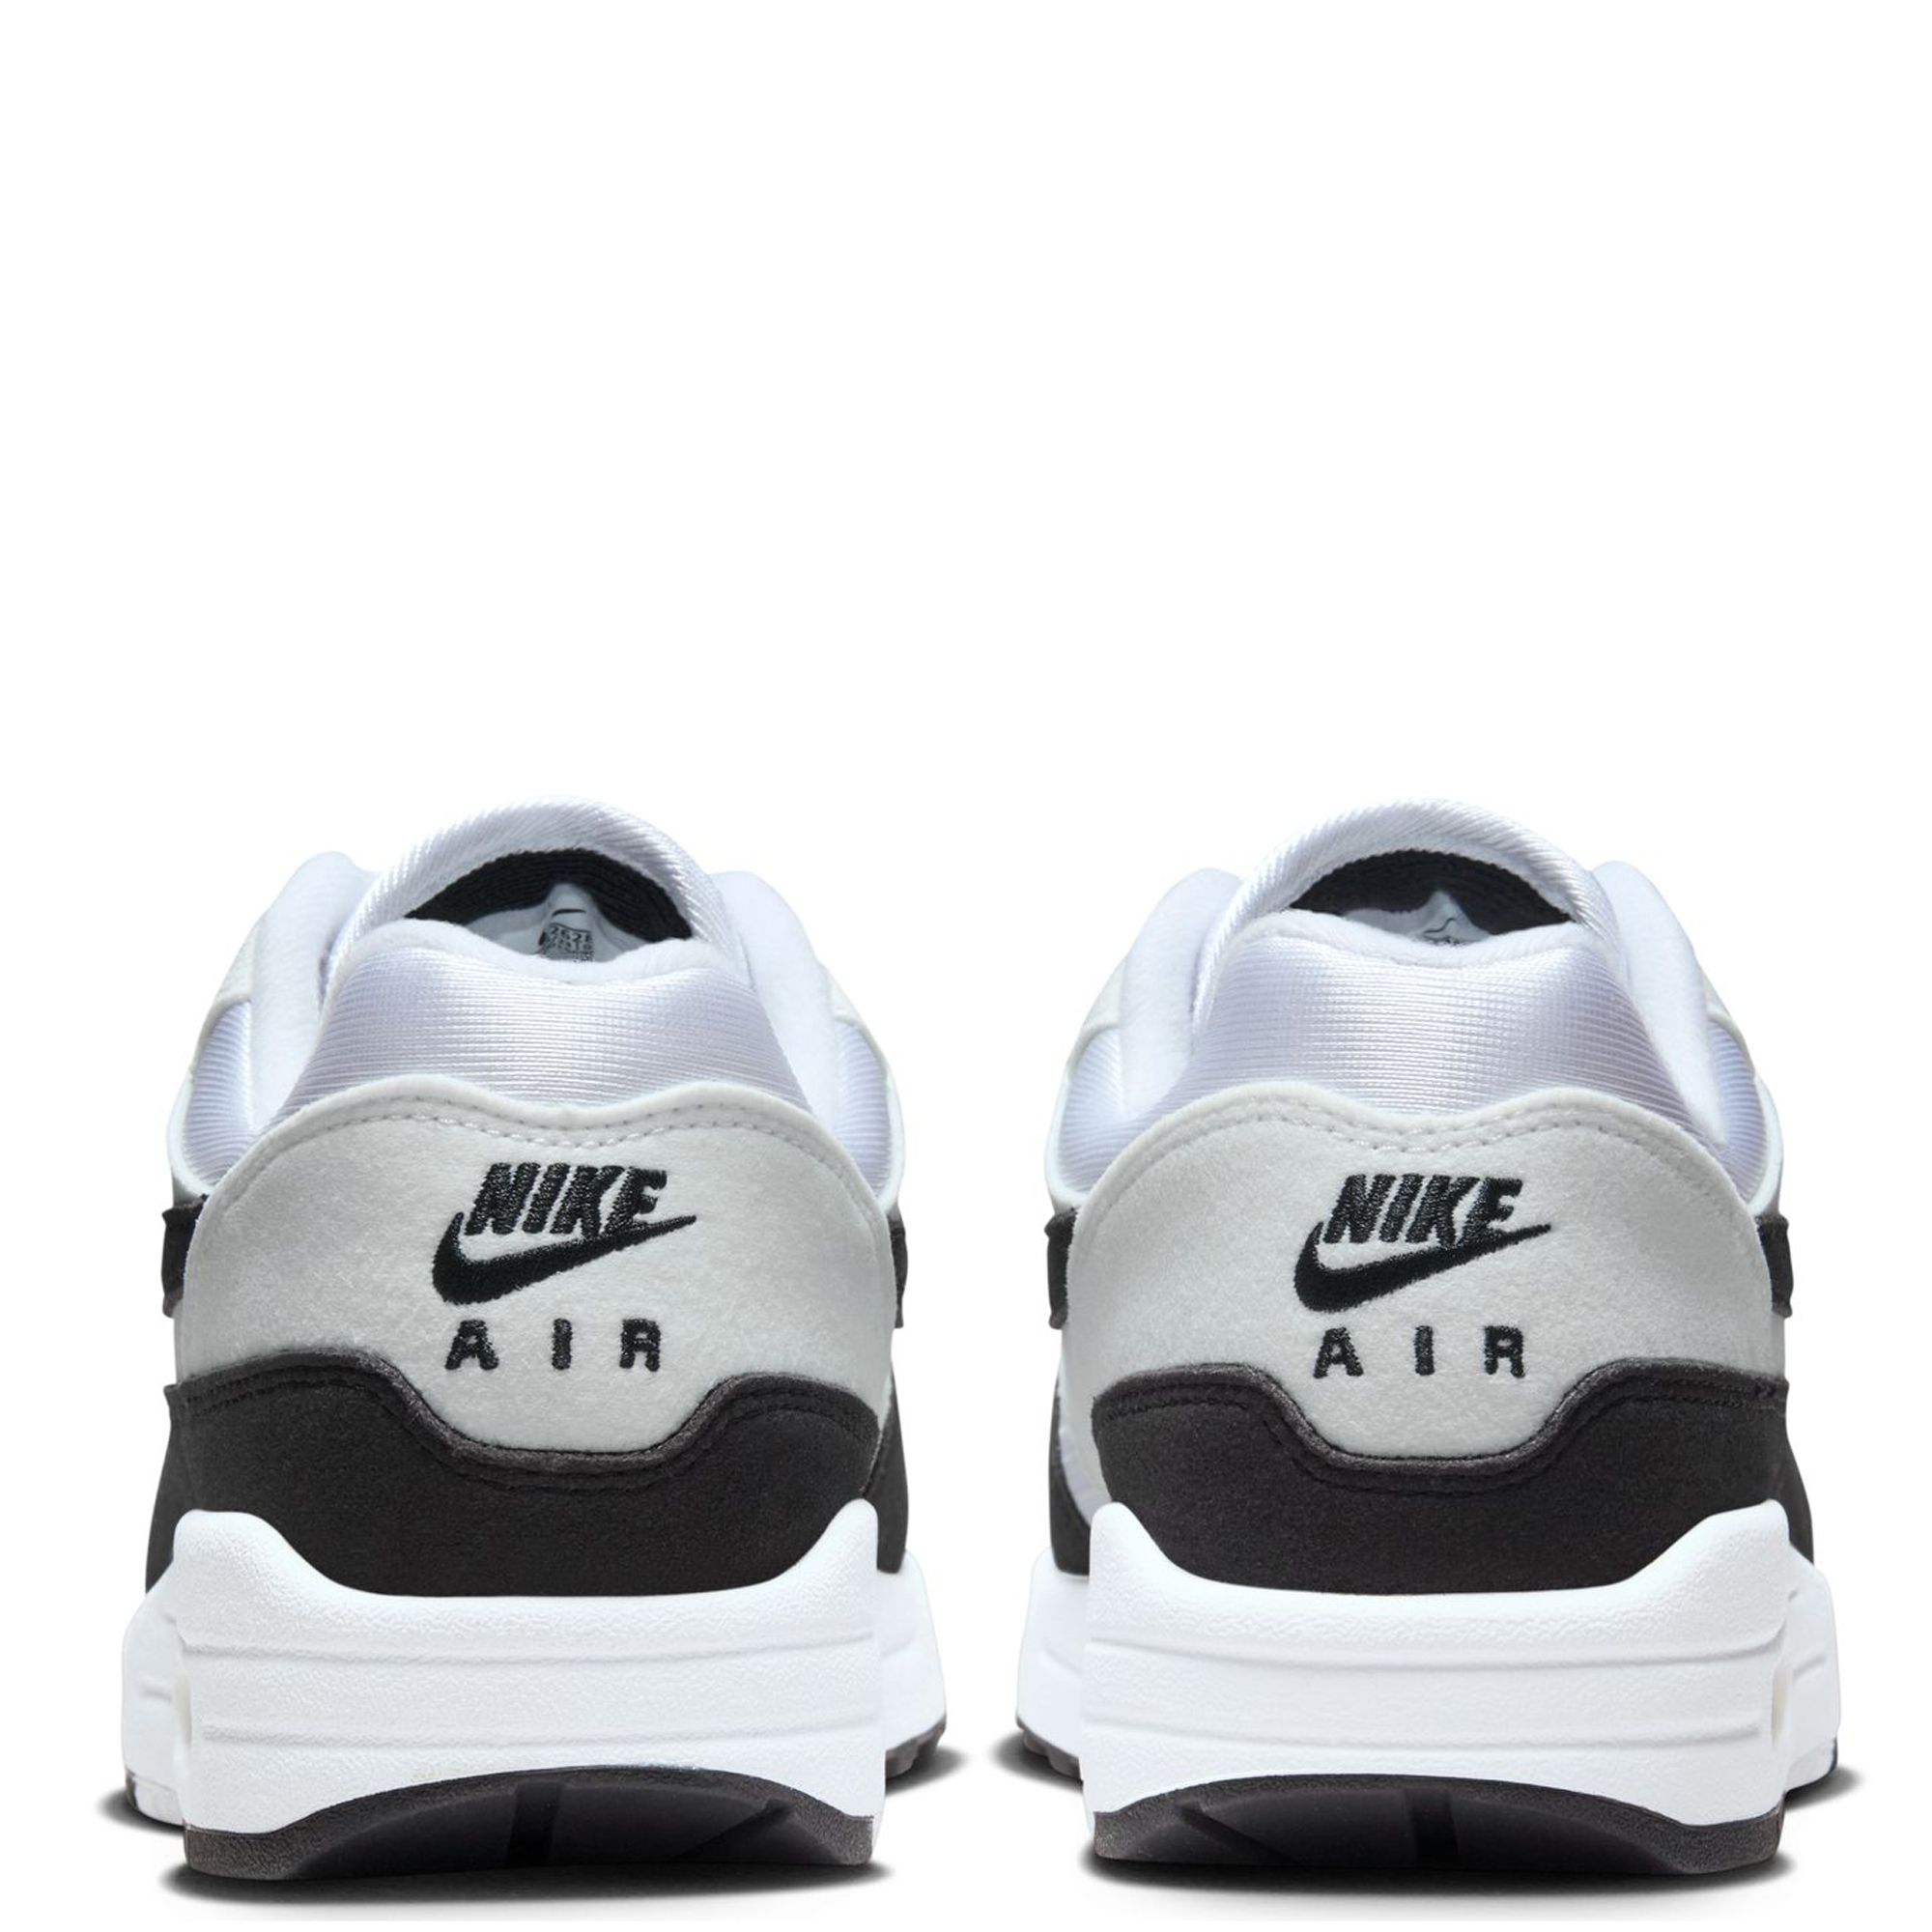 Nike Air Max 1 Premium Jewel Black White. Size Man - Price: 139